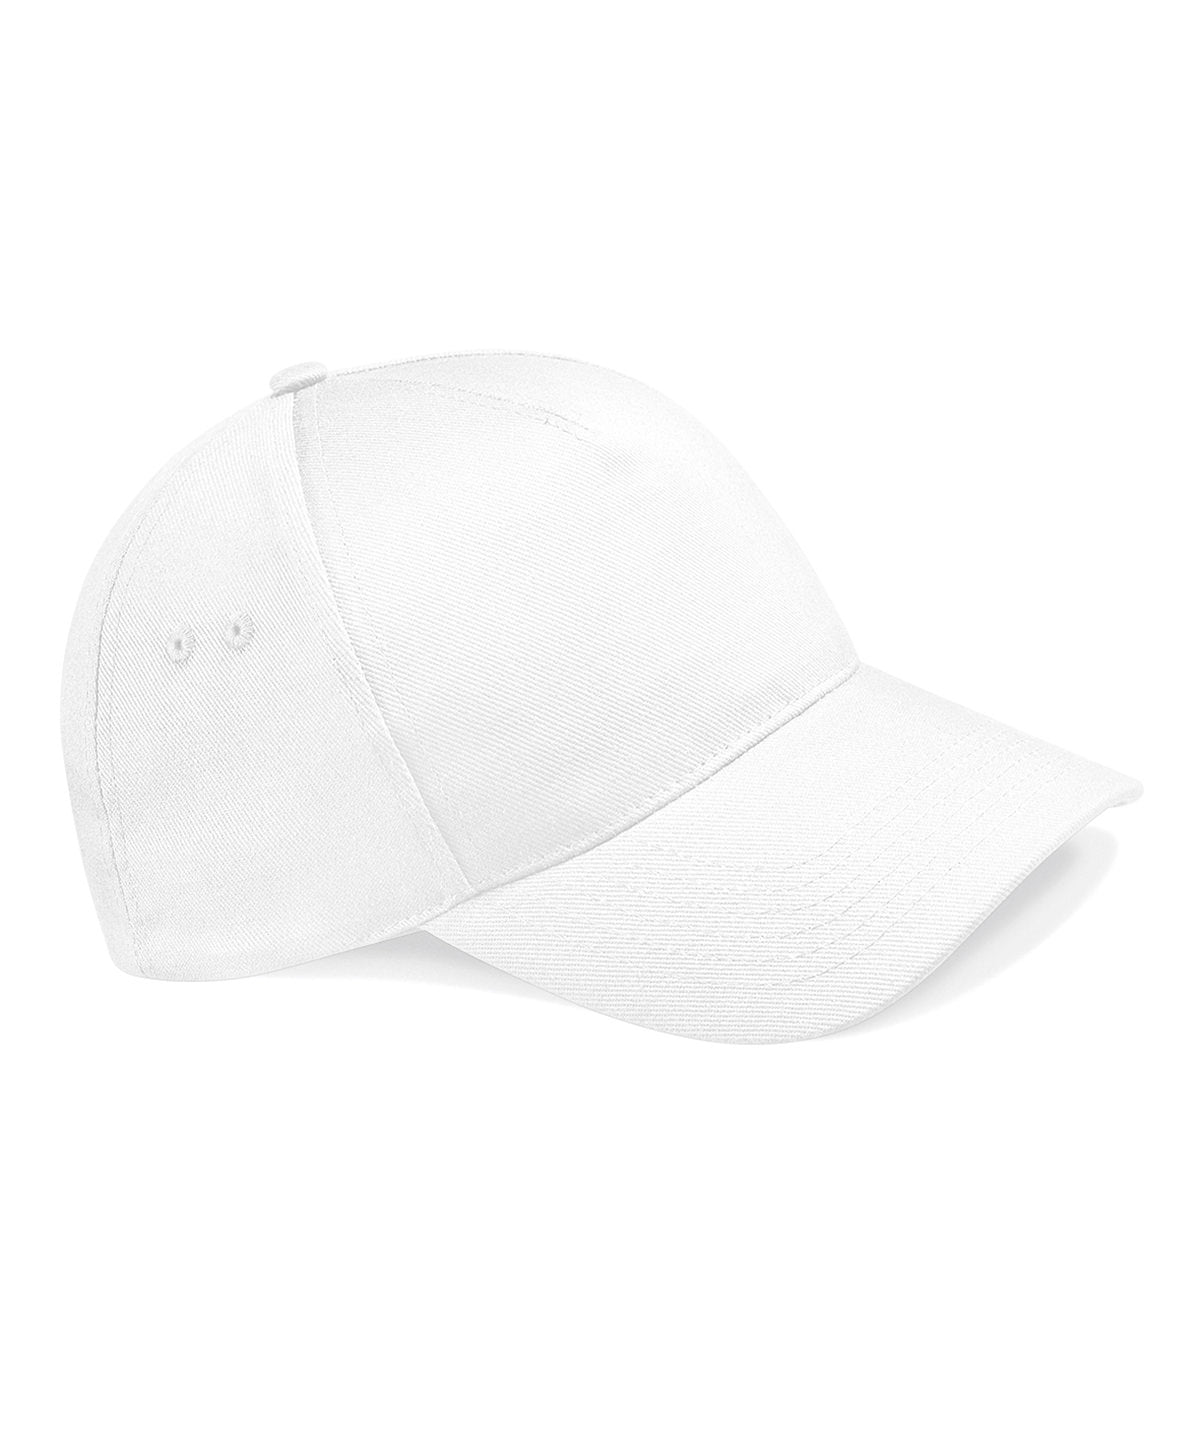 Personalised Caps - White Beechfield Ultimate 5-panel cap